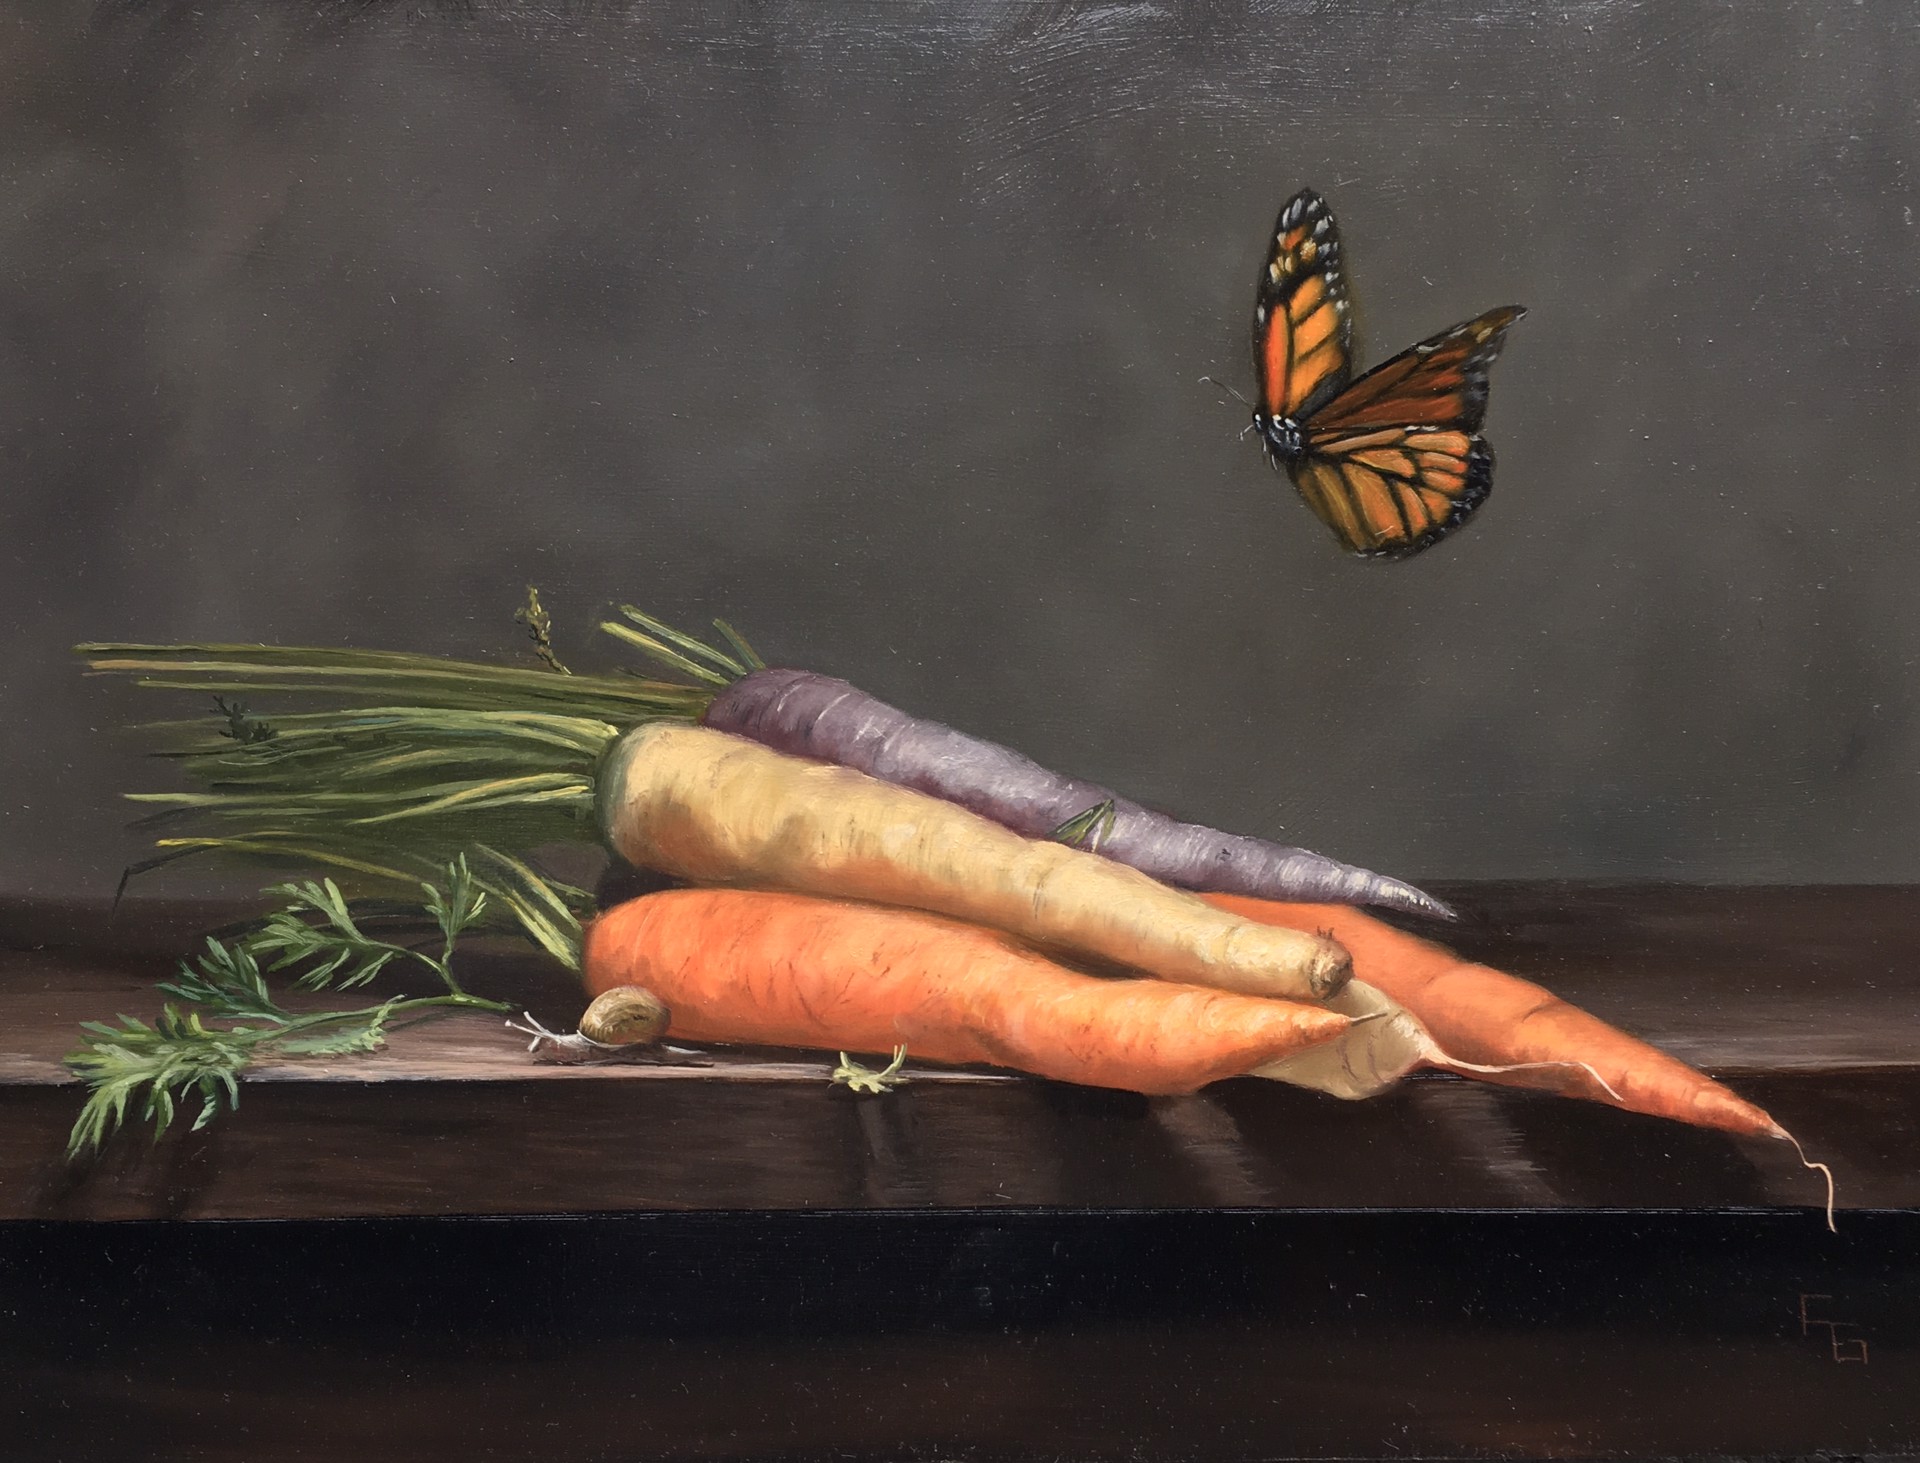 Still Life with Carrots by Frankie Gollub